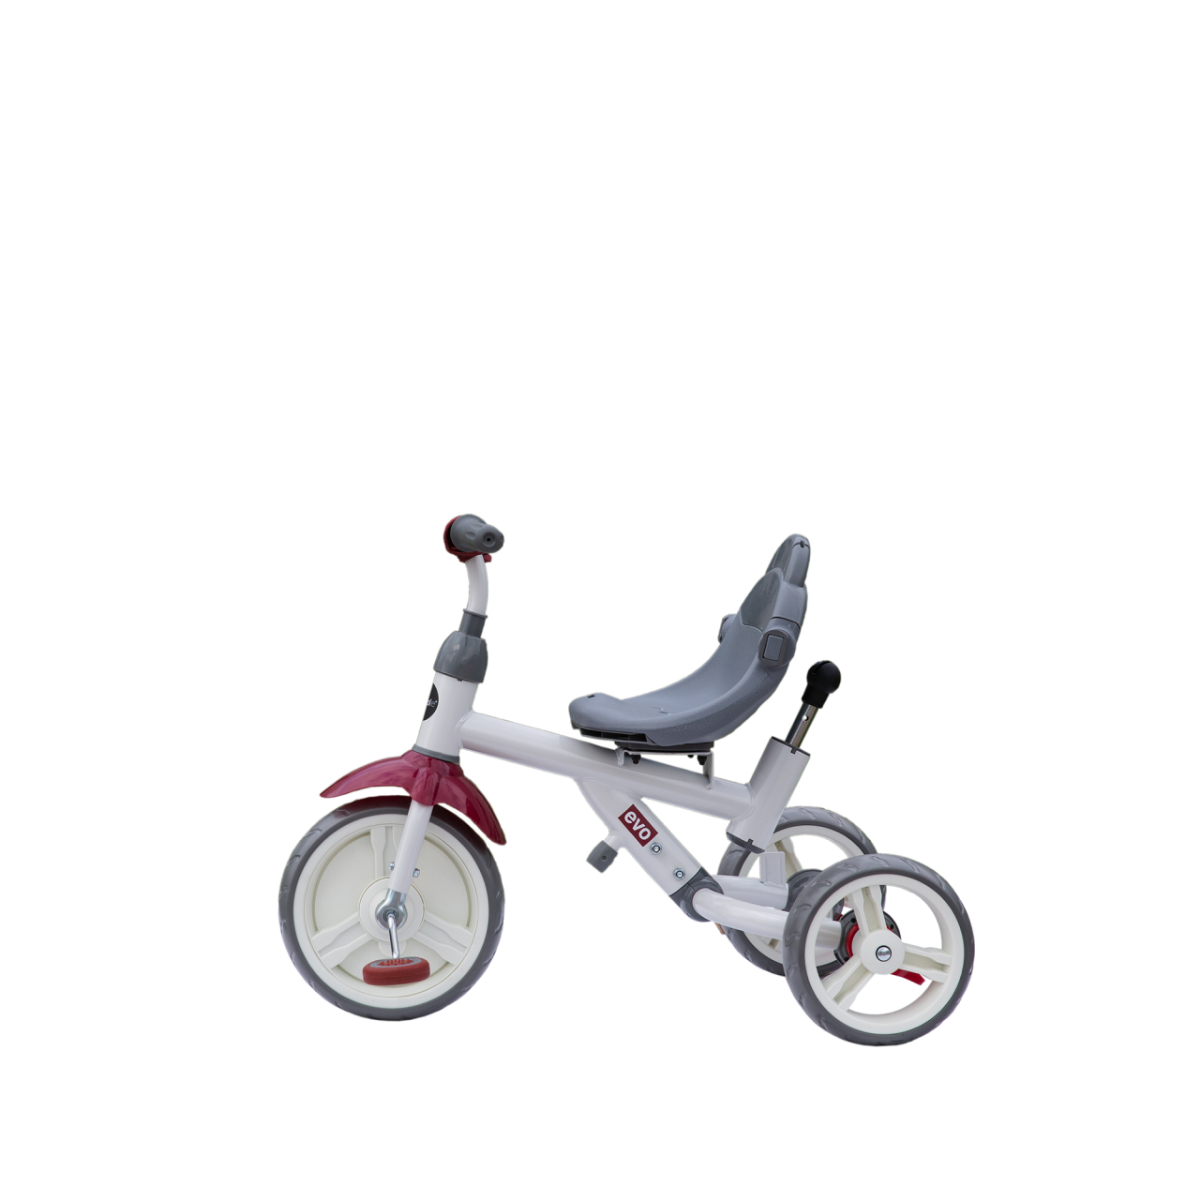 Tricicleta cu sezut reversibil Coccolle Evo (2019) Visiniu image 7